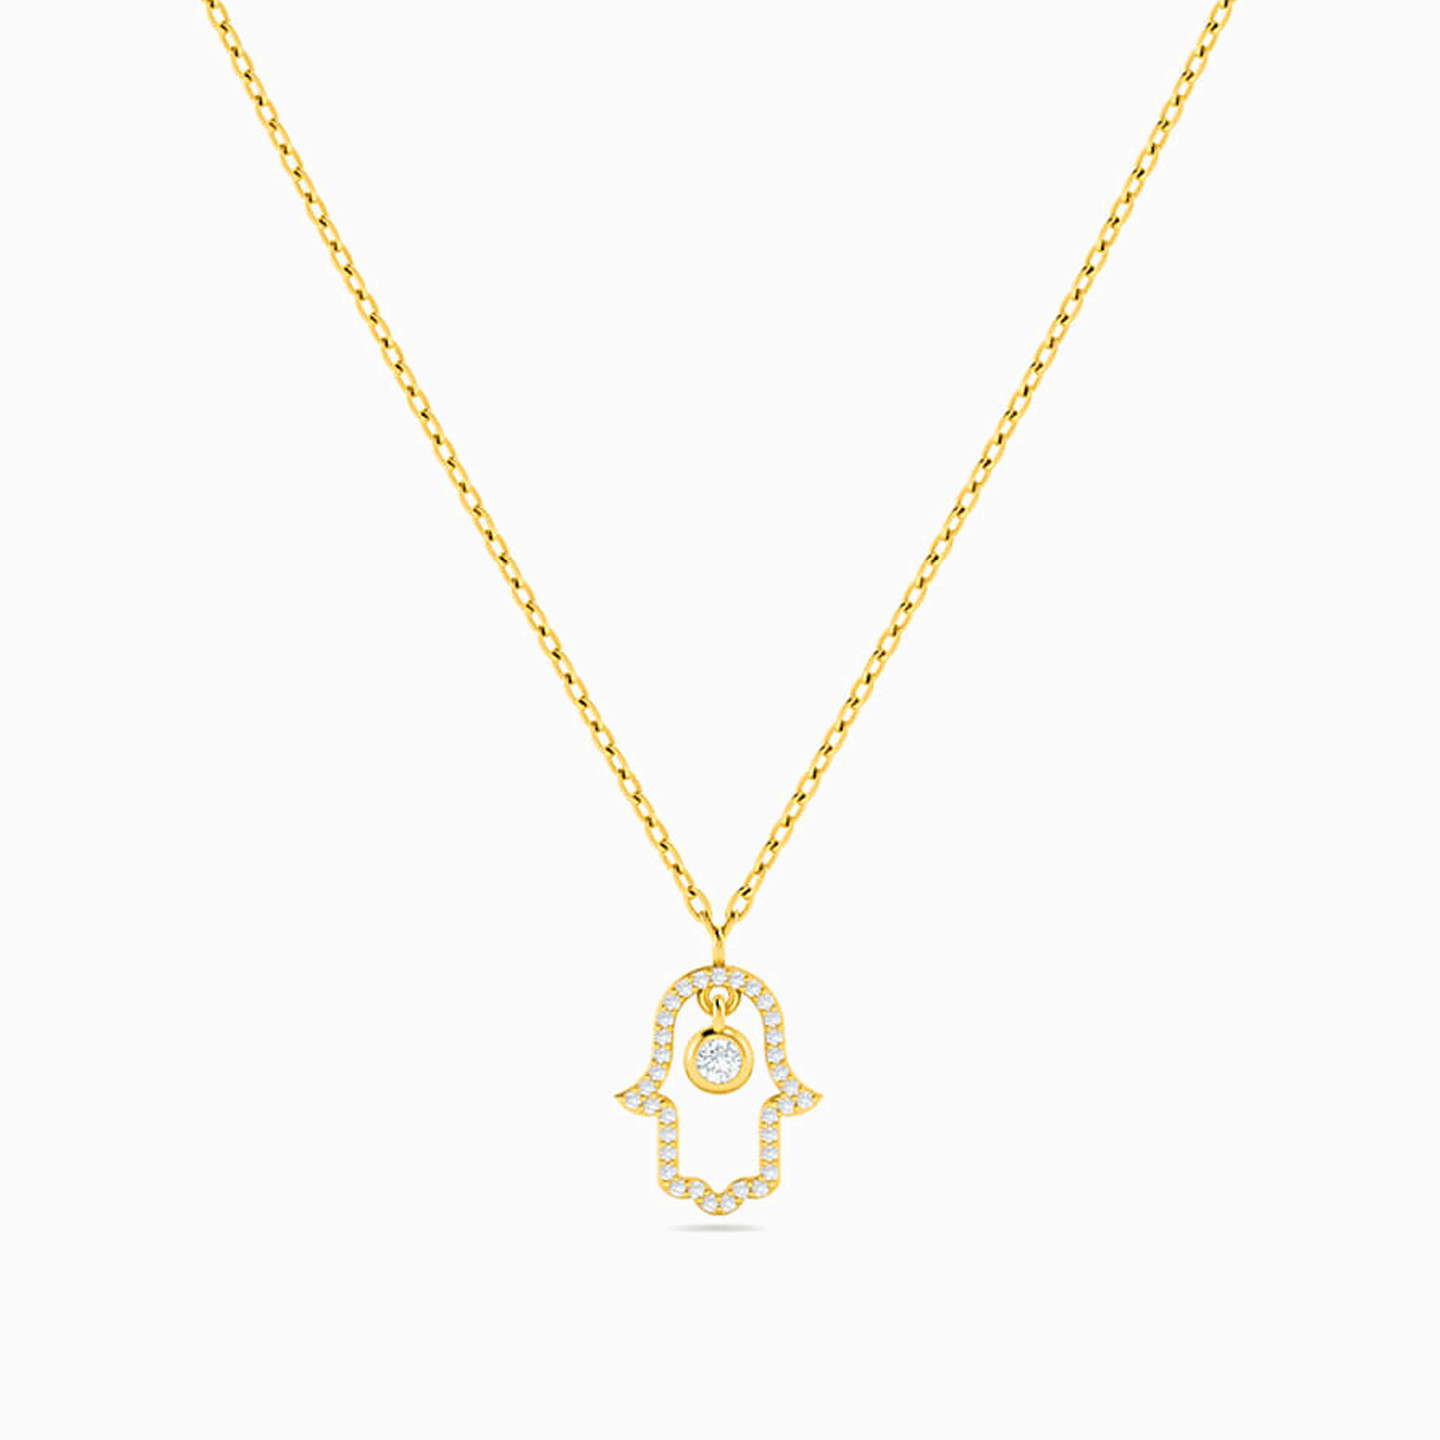 18K Gold Diamond Pendant Necklace - 3